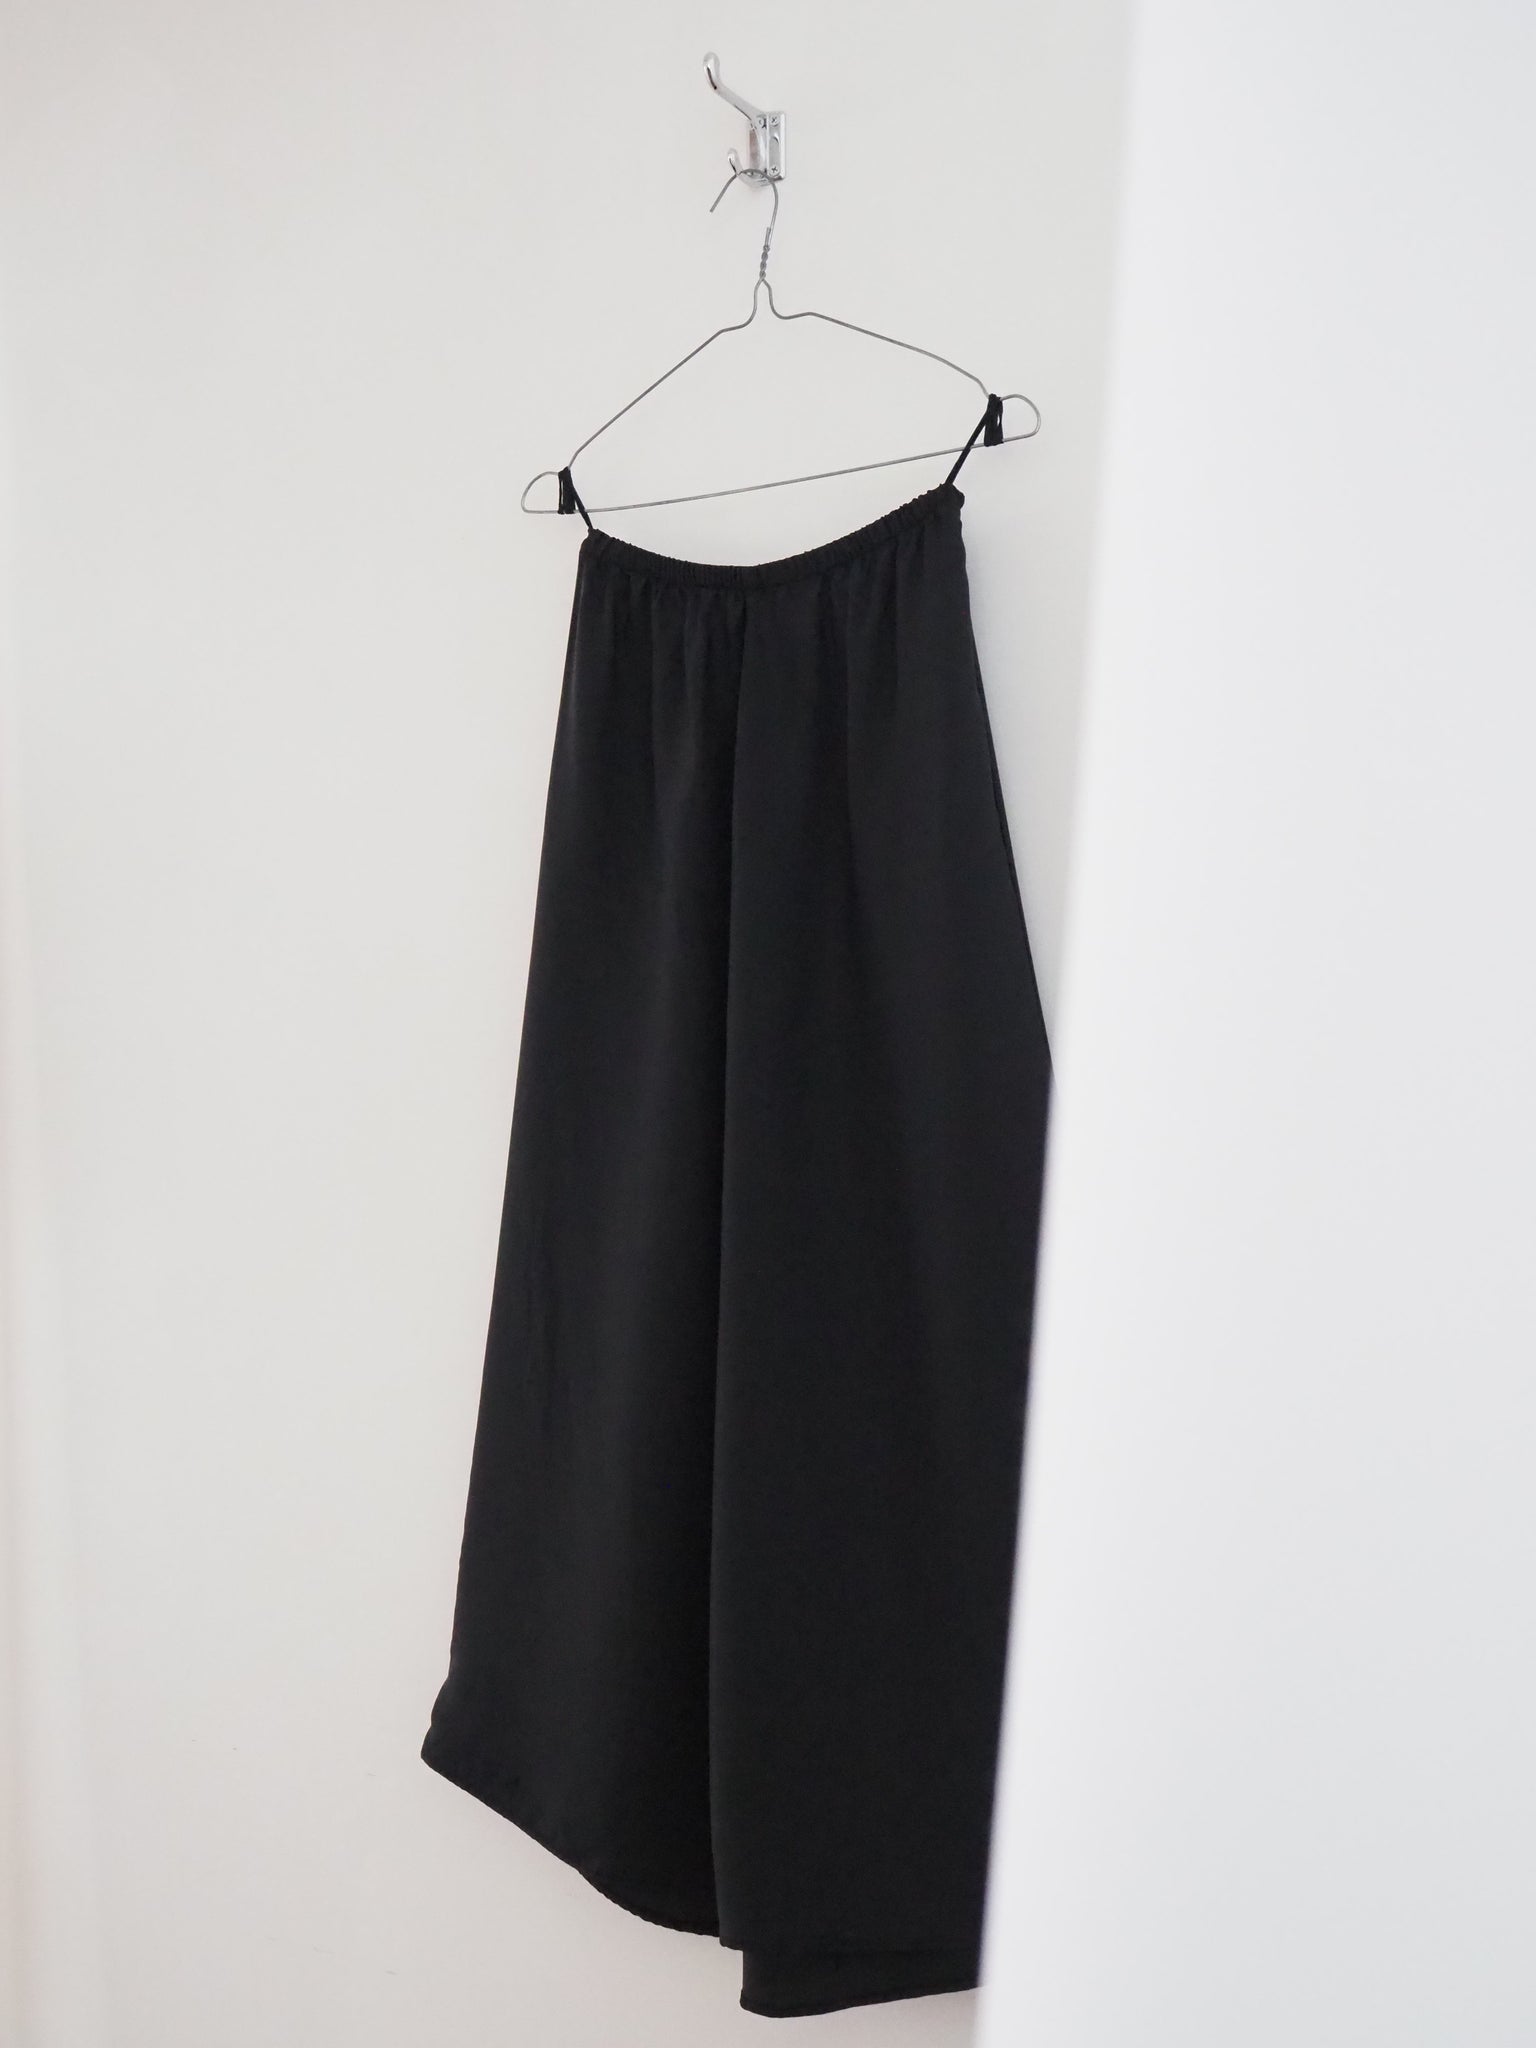 Sunday skirt - Black